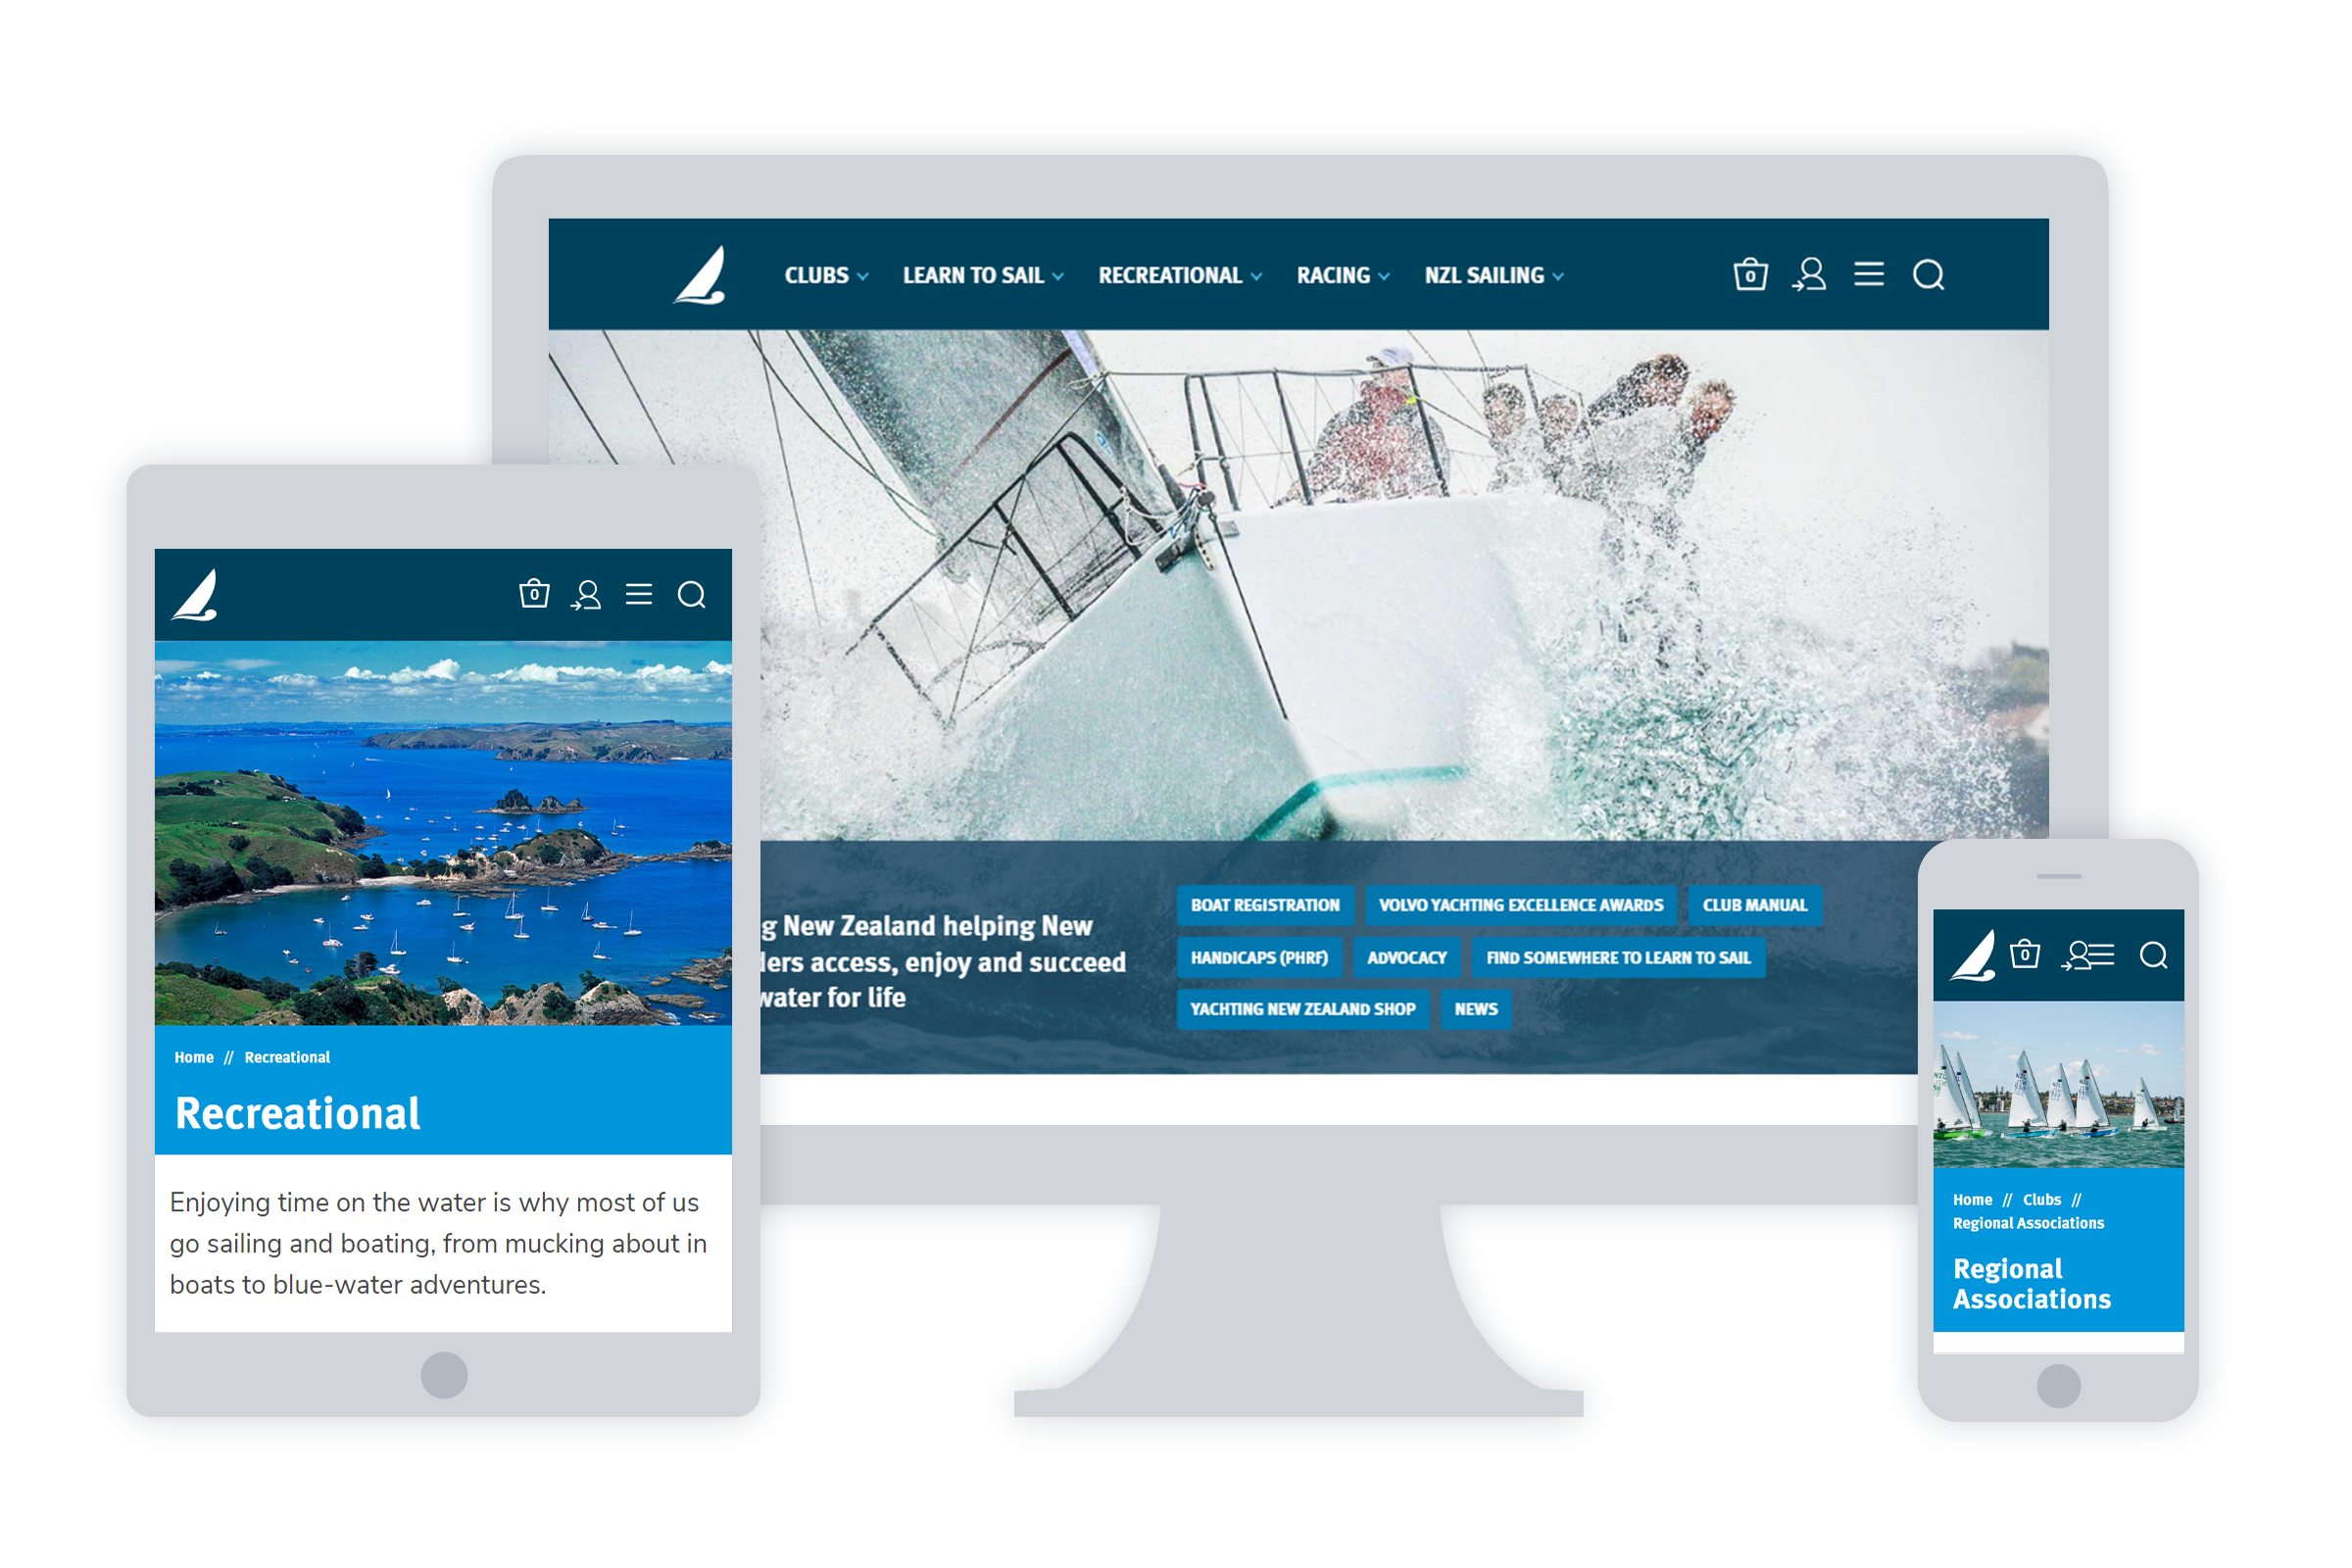 Screenshots of Yachting NZ website